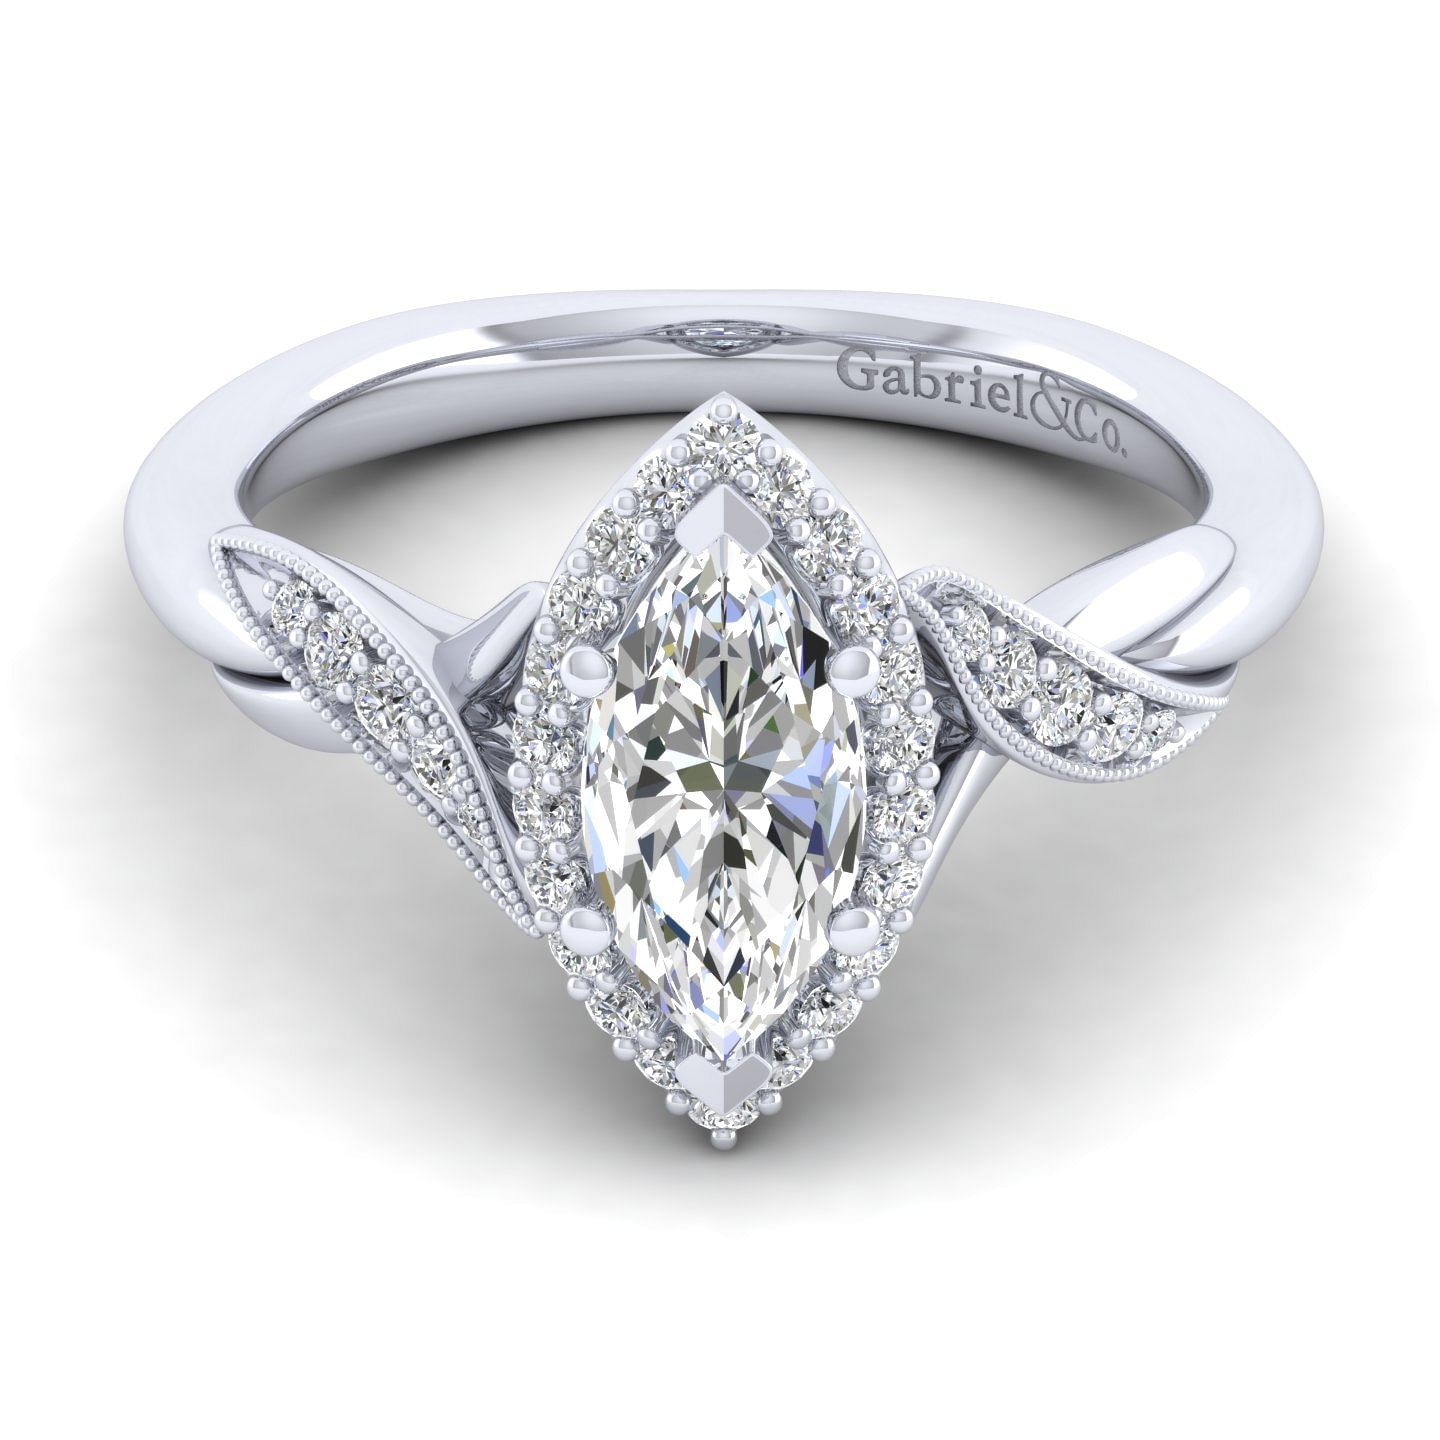 Shae - Vintage Inspired 14K White Gold Marquise Halo Diamond Engagement Ring